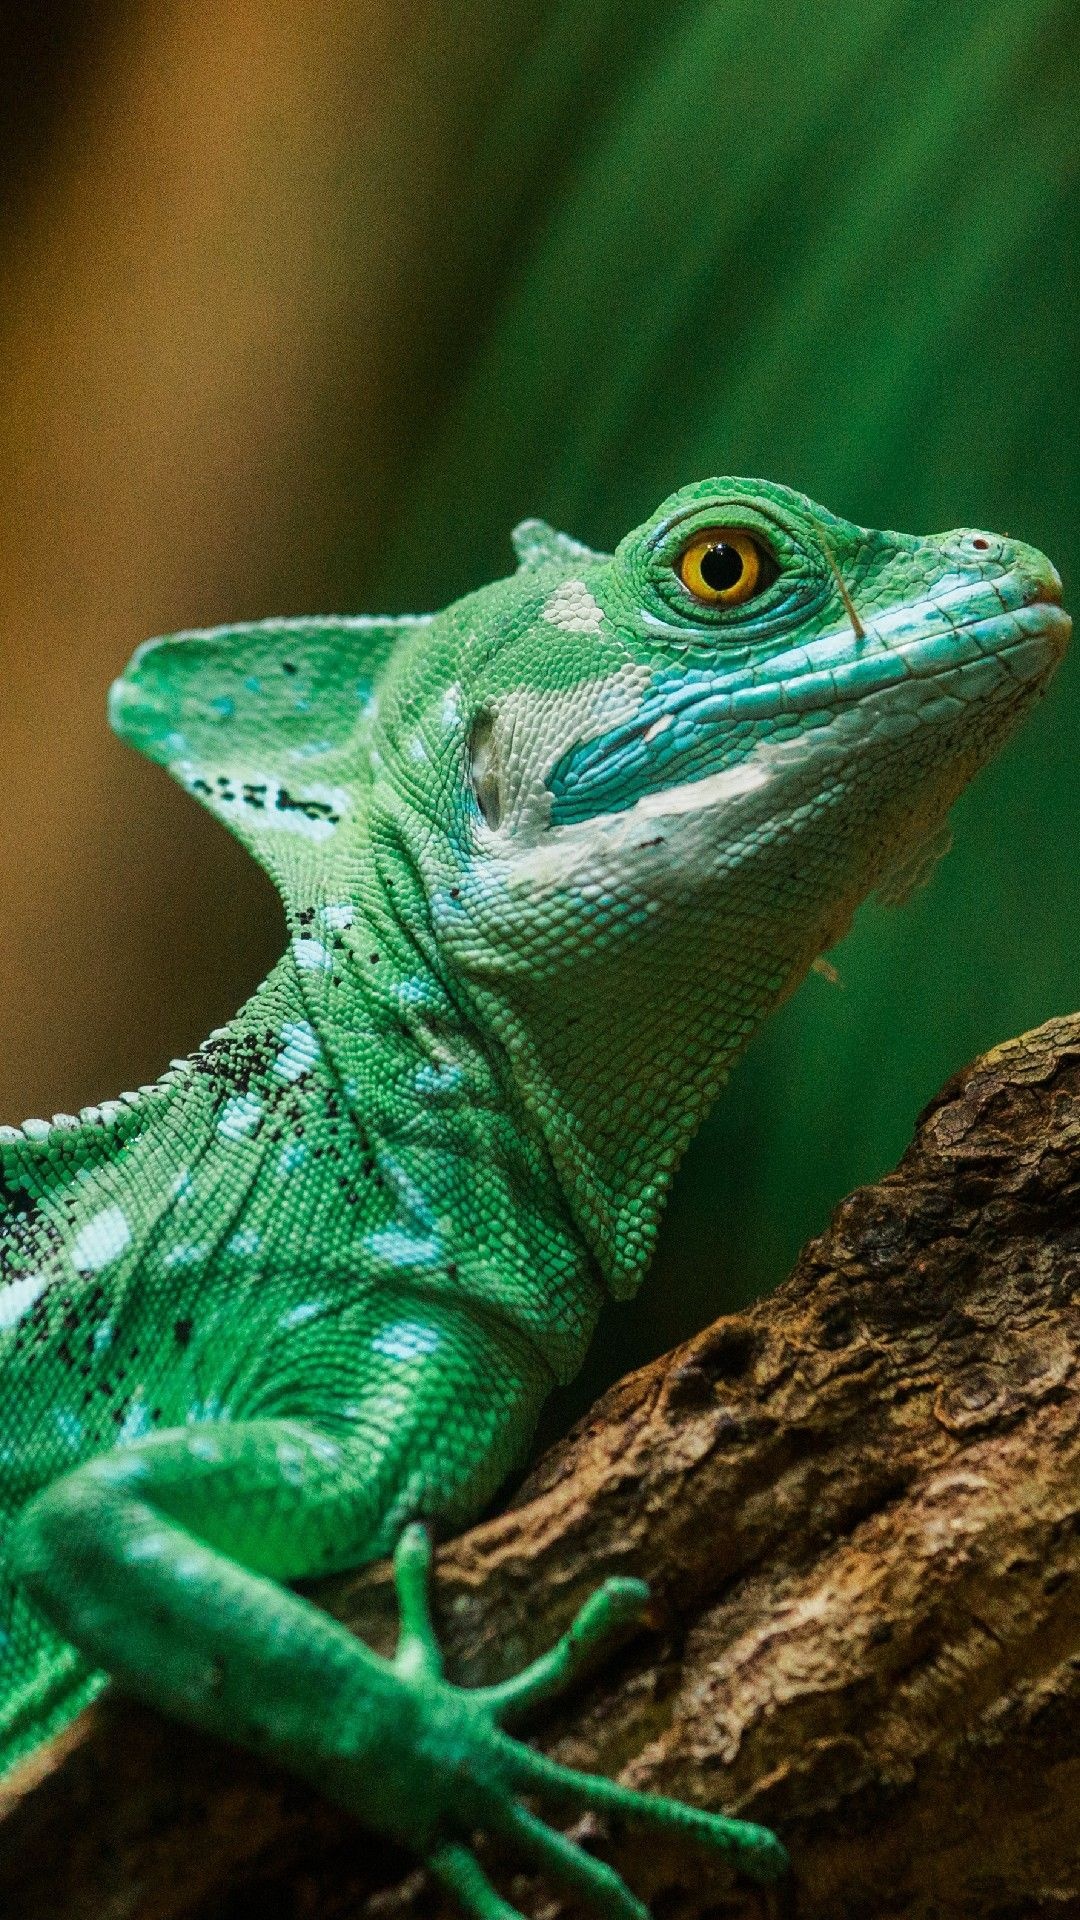 Colorful lizard, Phone wallpaper, Lockscreen background, High-resolution, 1080x1920 Full HD Handy